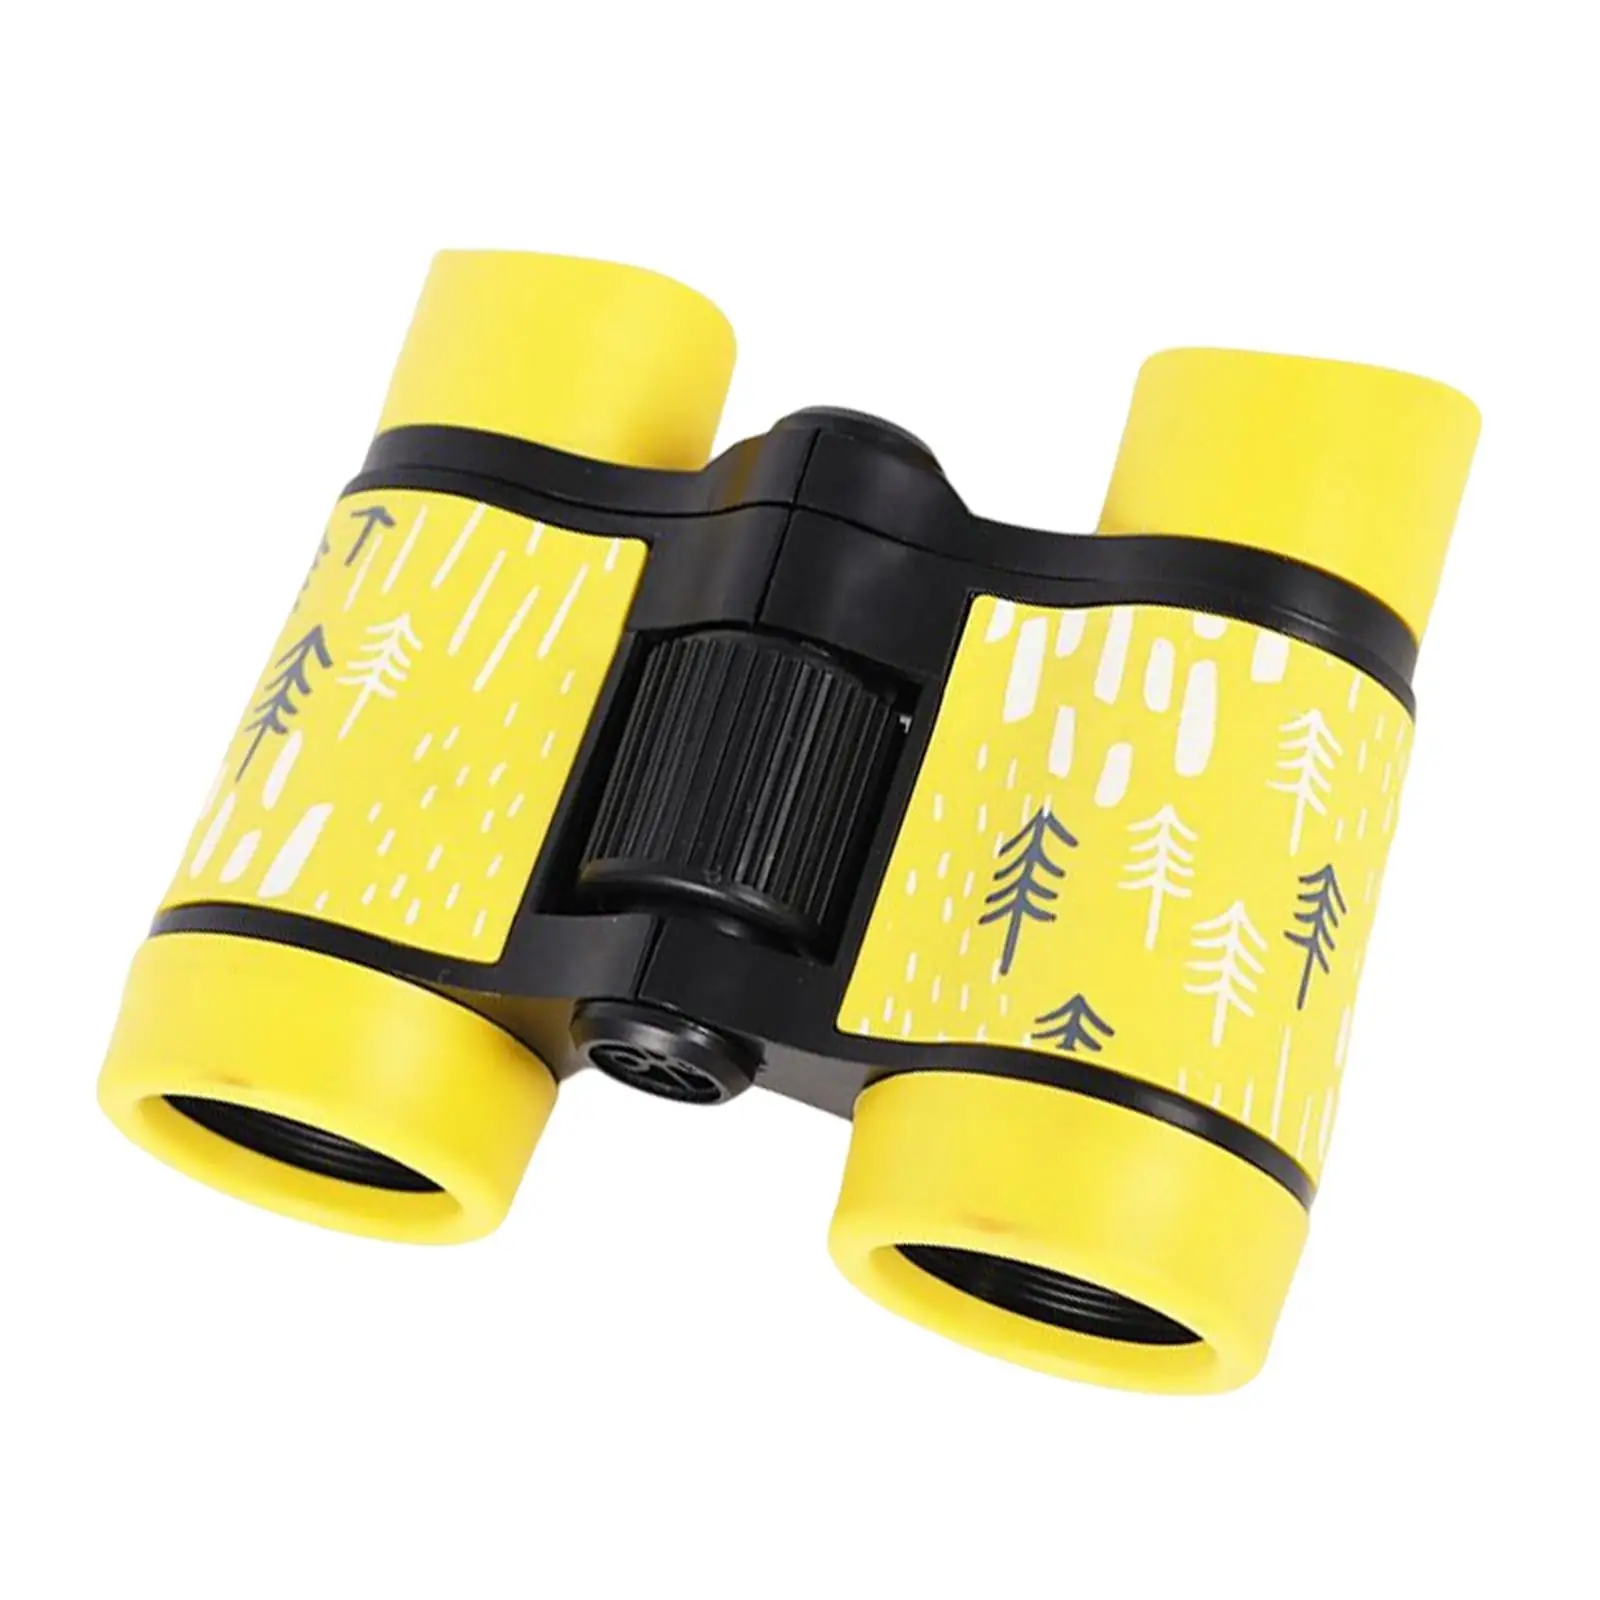 Kids Binocular Folding Birthday Gift 4x30mm Compact Telescope Toy for Sightseeing Bird Watching Camping Learning Boys Girls